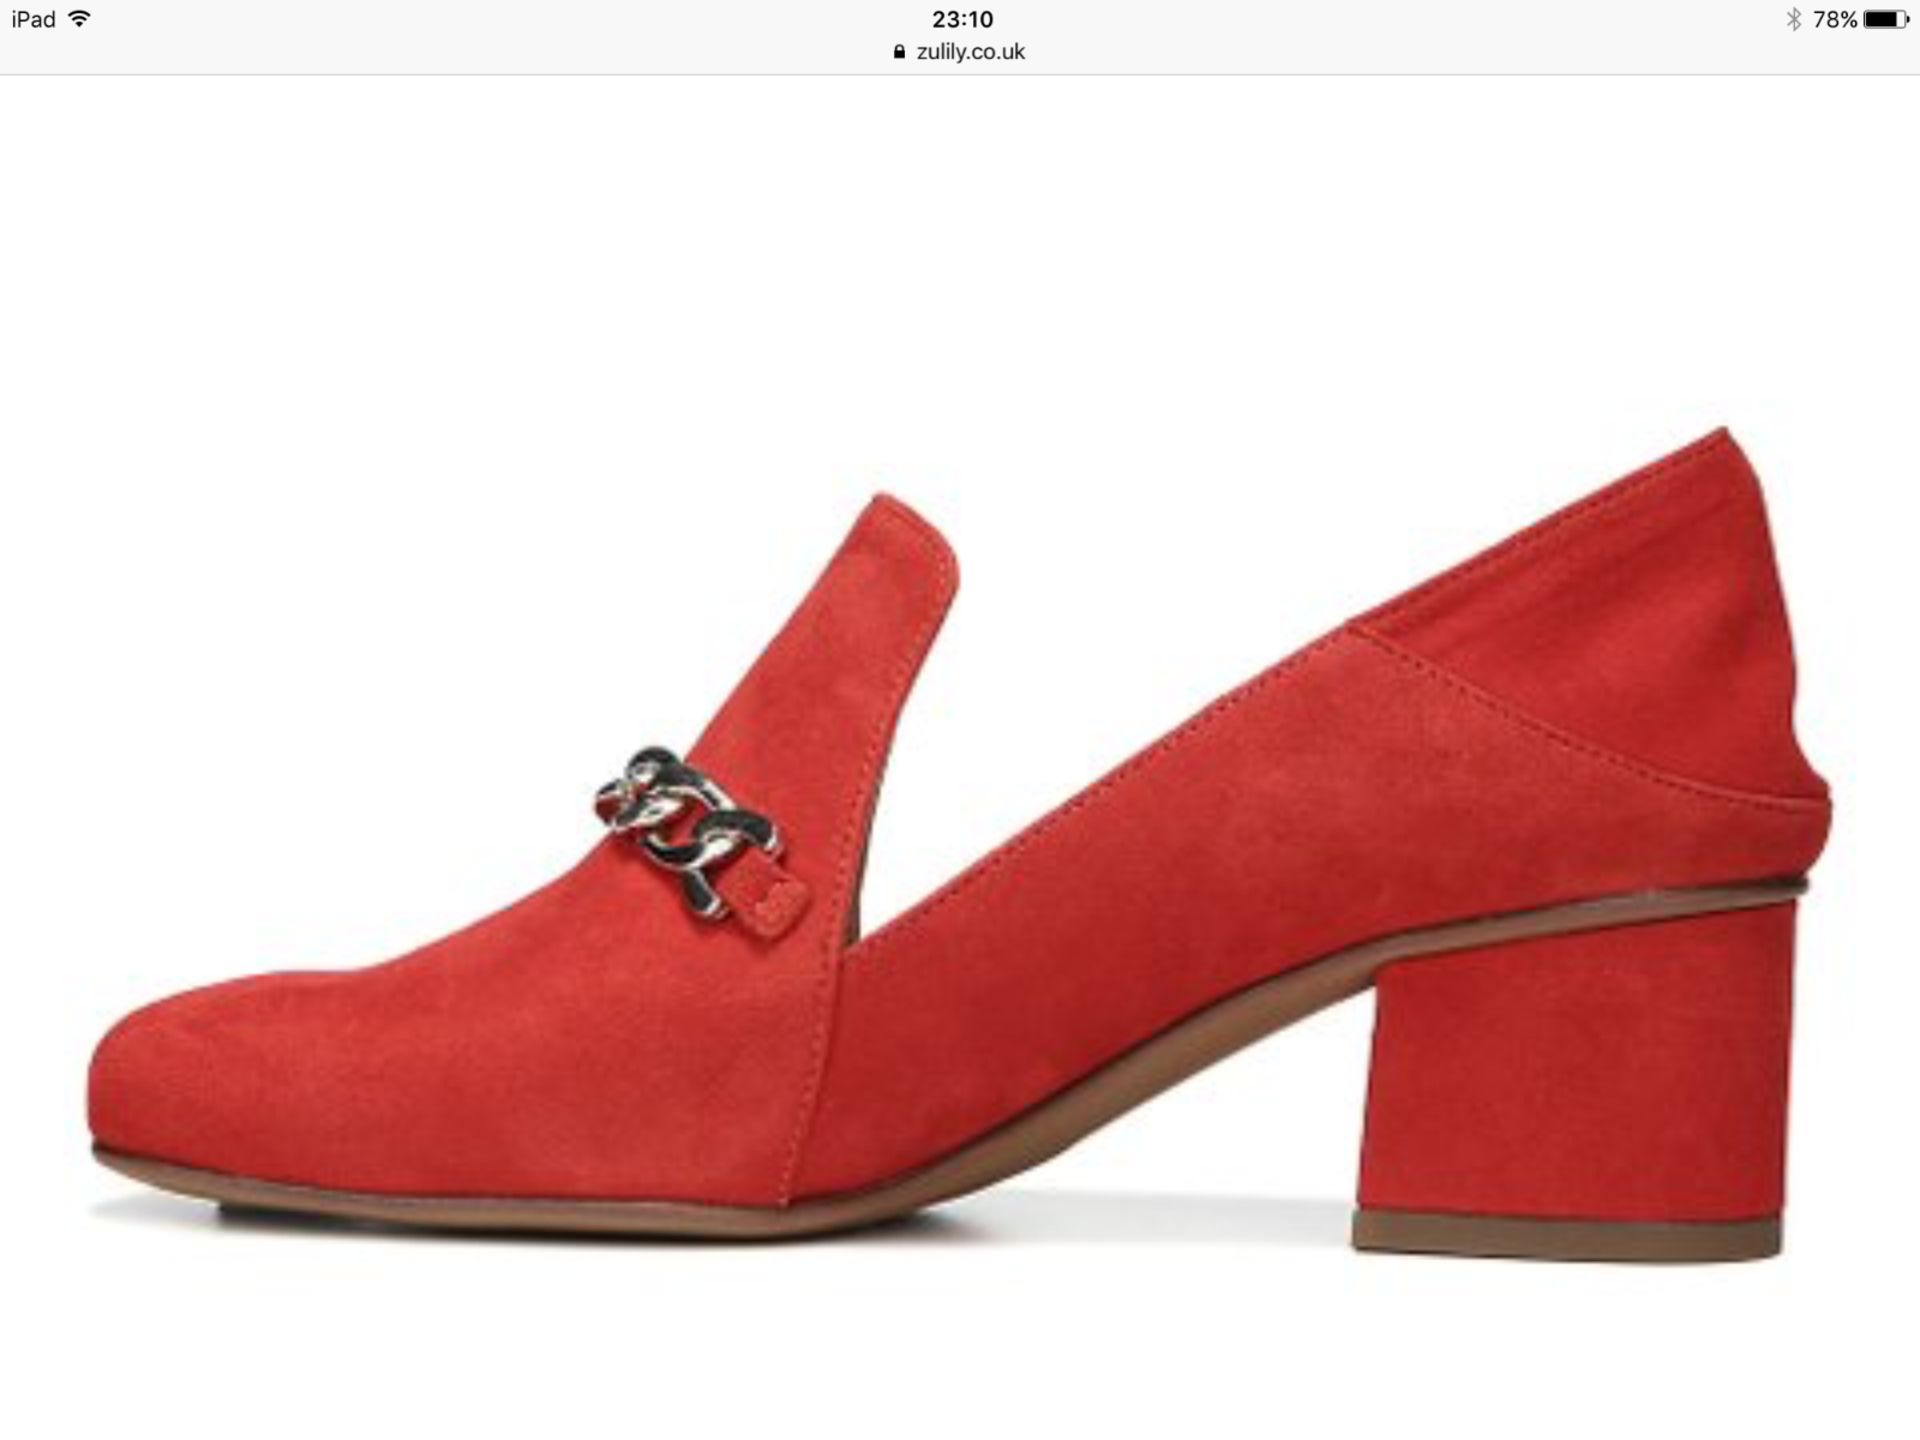 Franco Sarto Hibiscus Red Layola Shoe, Size Uk 5.5-6 (New With Box) [Ref: 55491910 I004] - Image 3 of 6